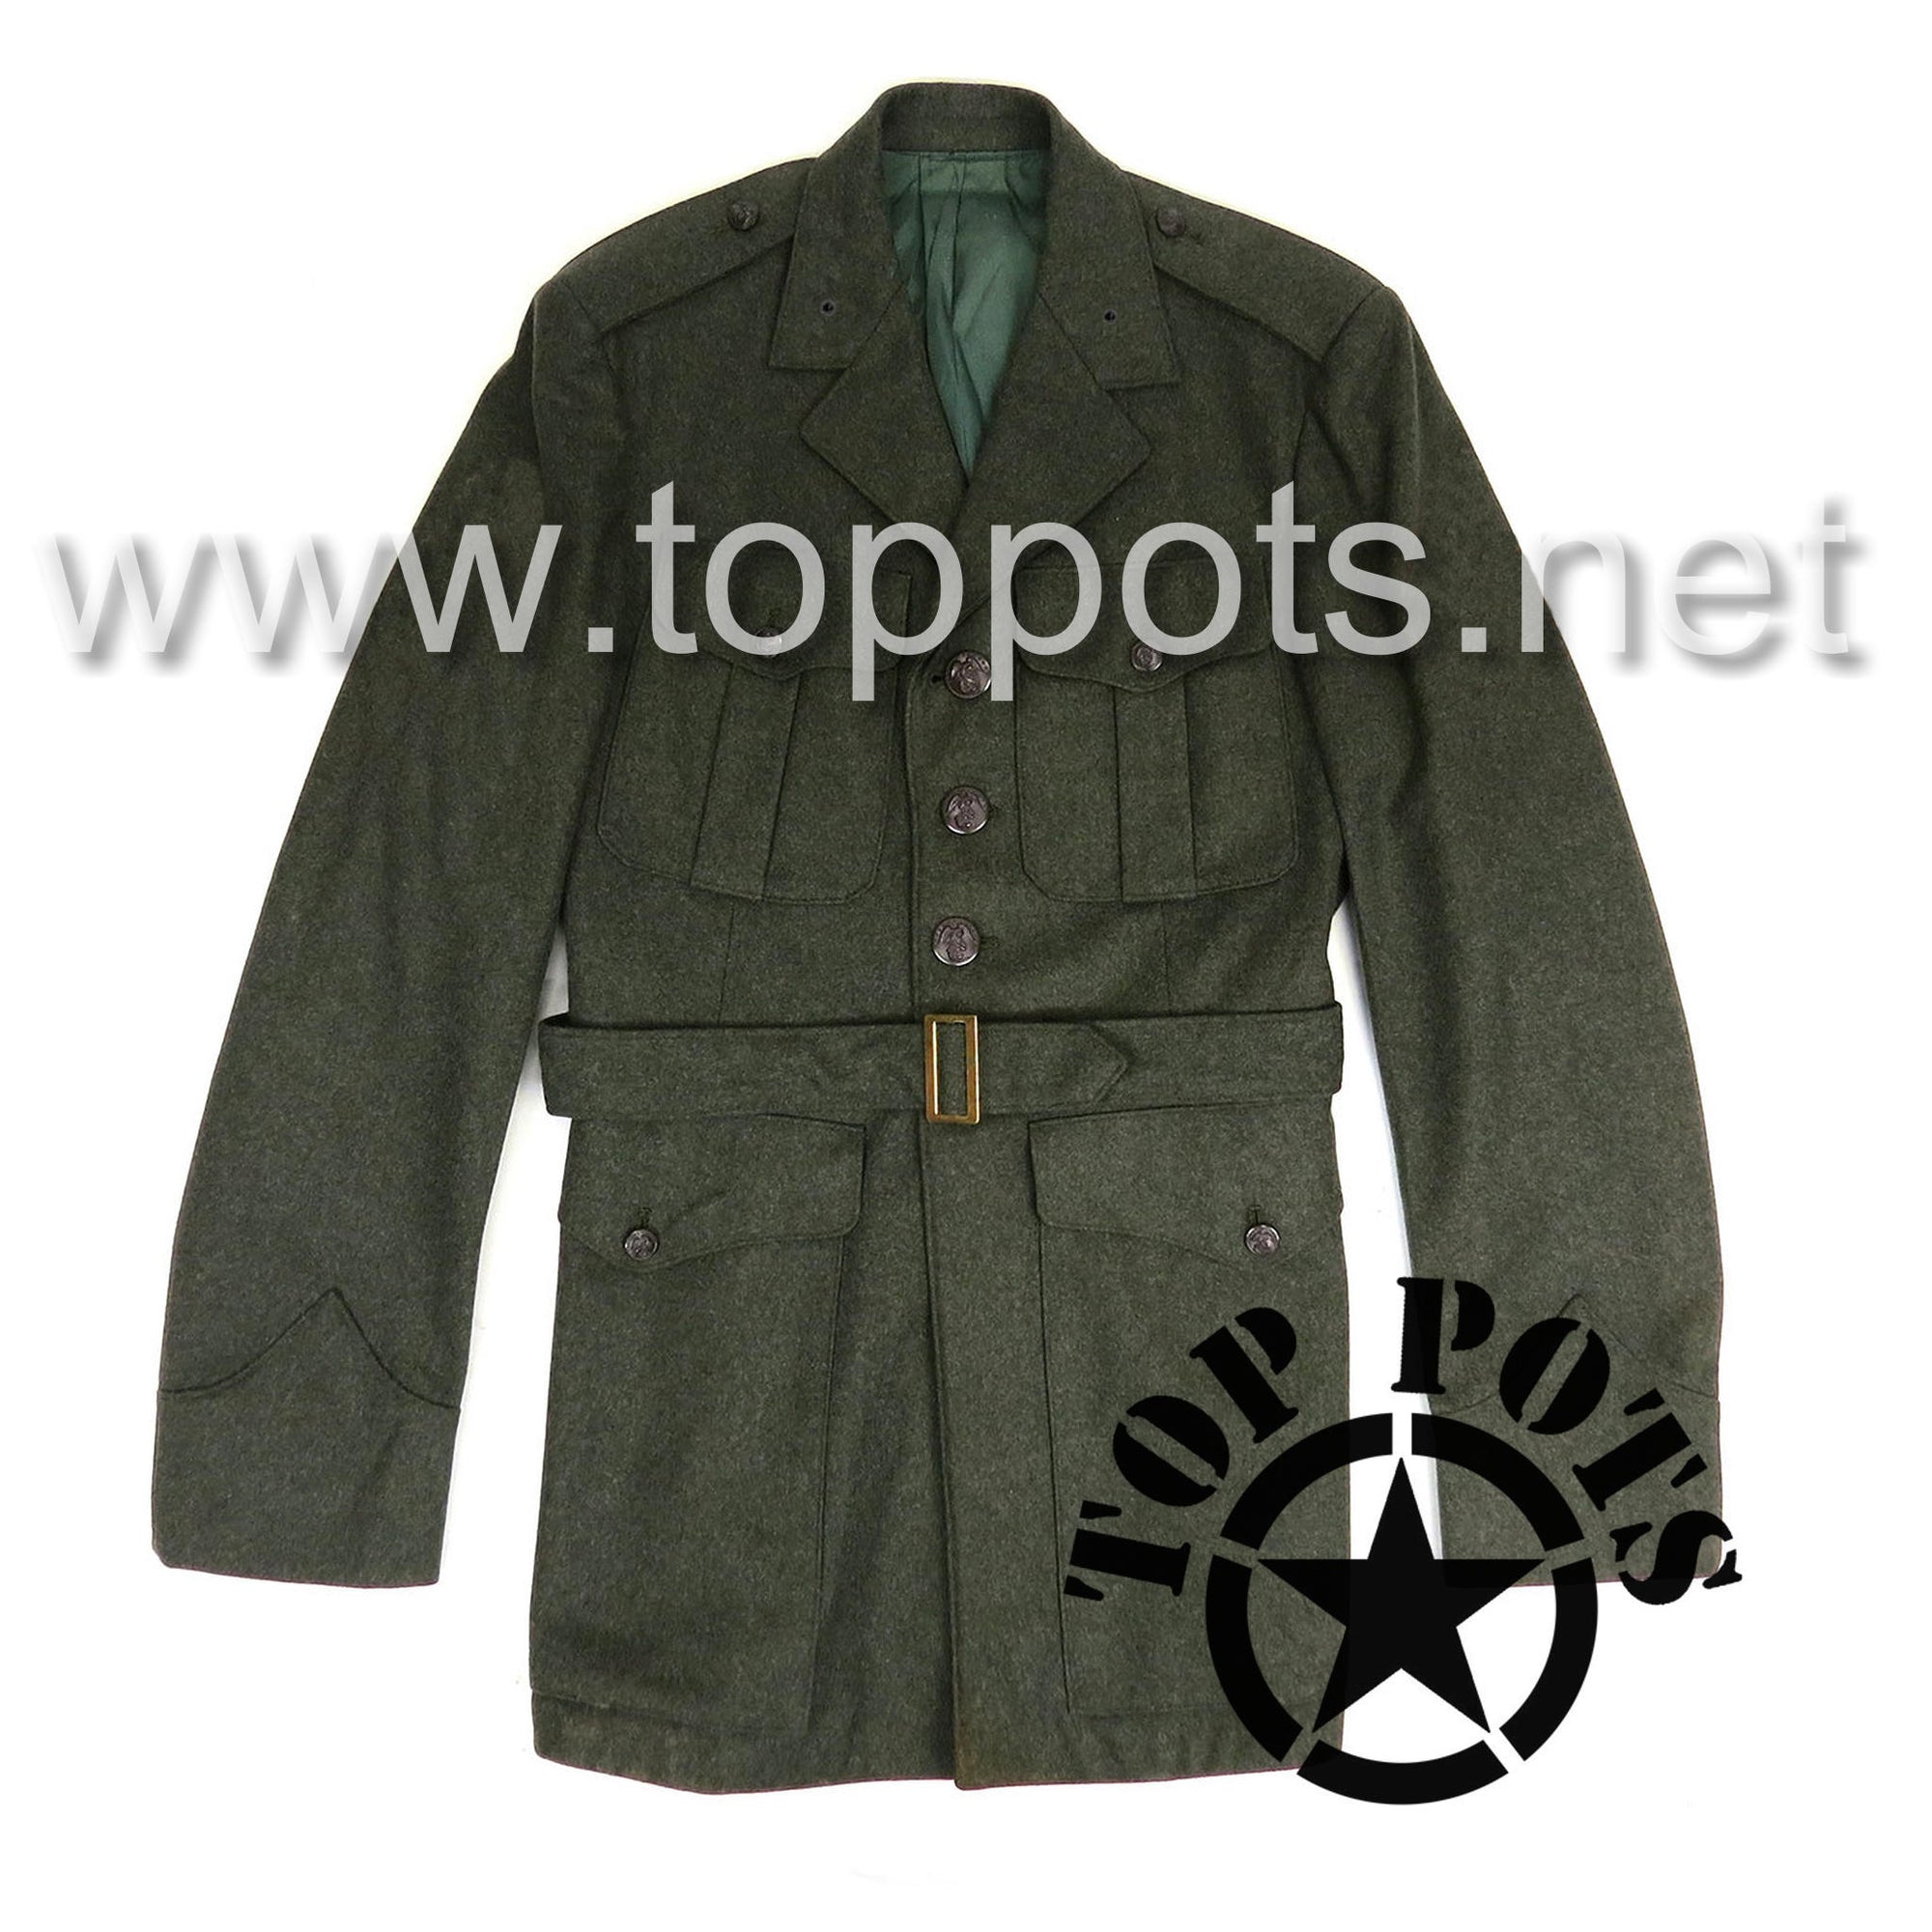 WWII USMC Reproduction M1937 Green Wool Marine Corps Service Dress Coat Jacket